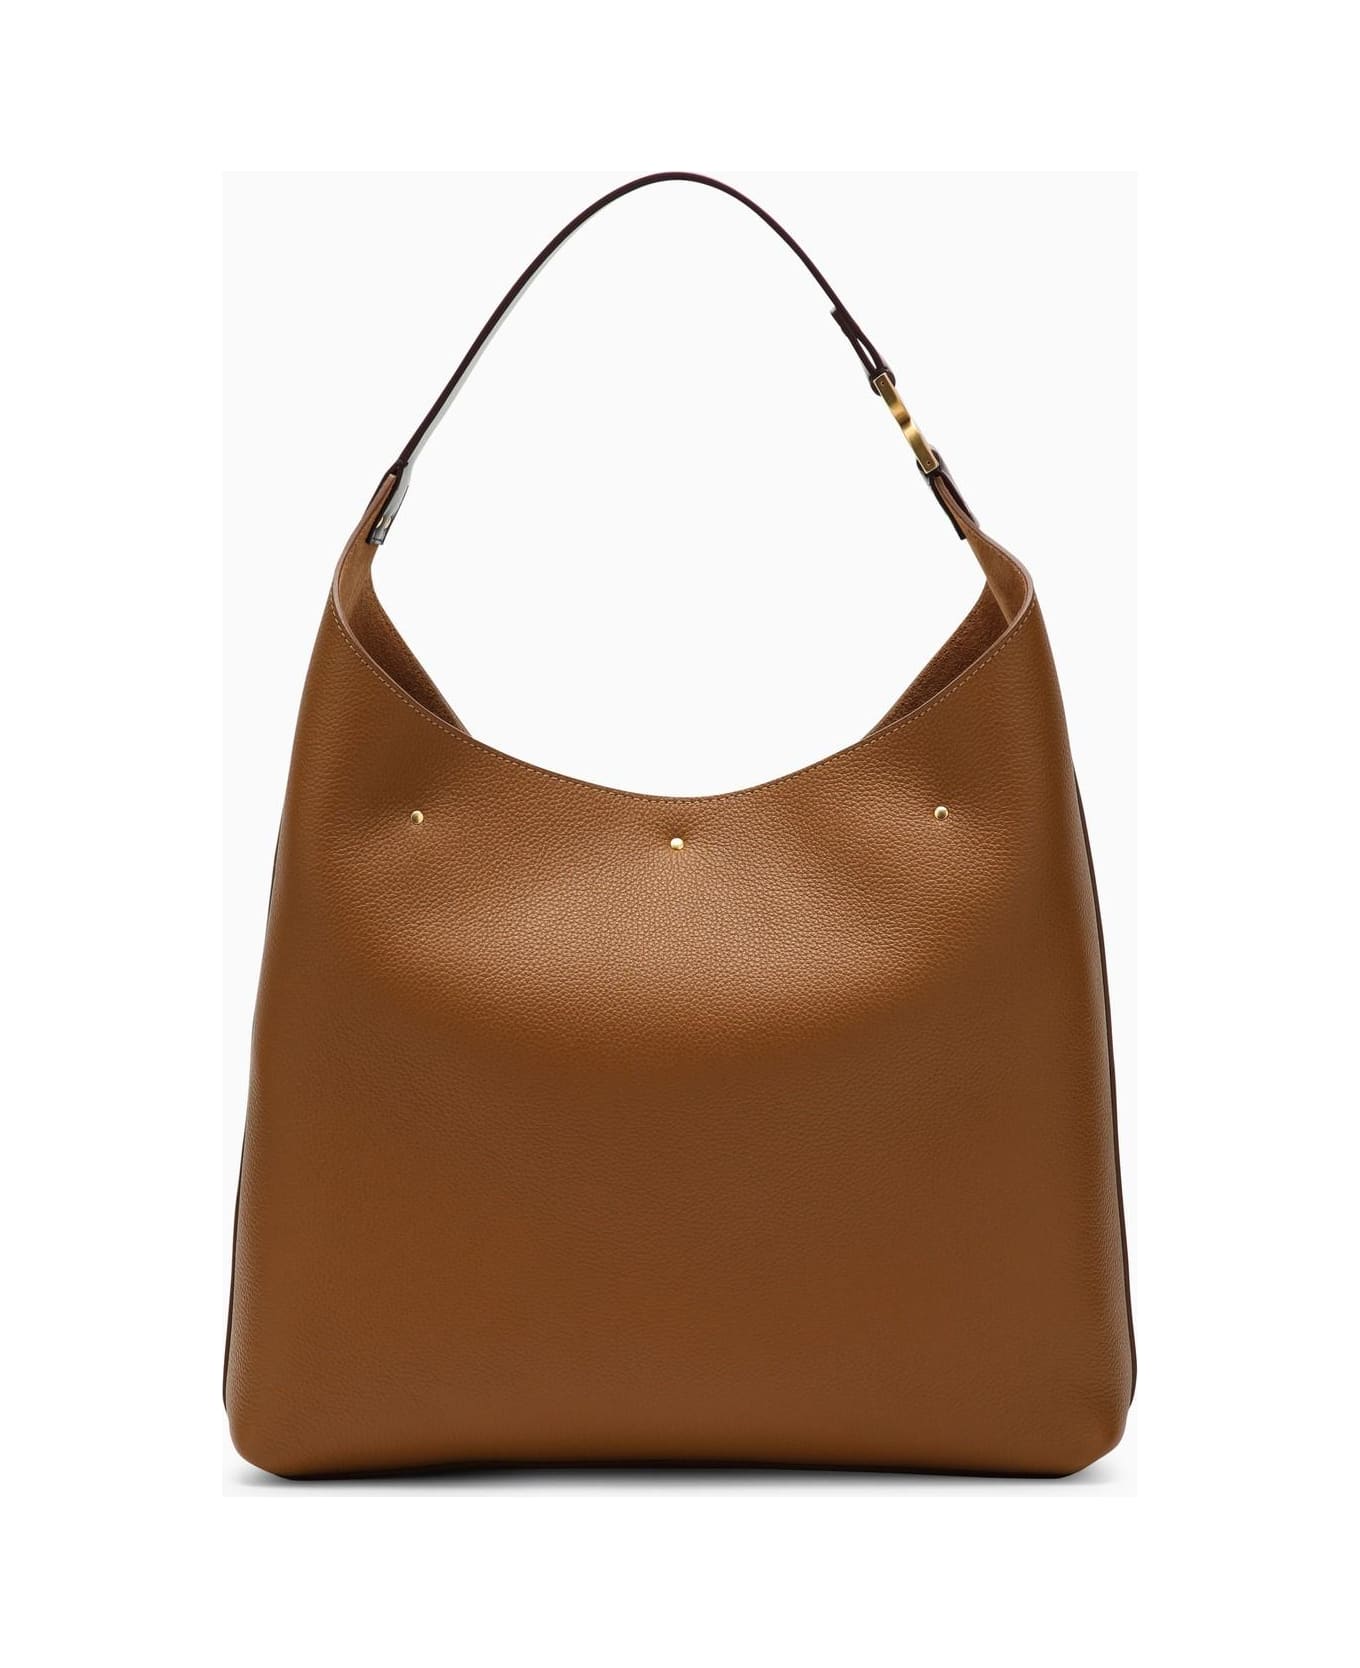 Chloé Mercie Brown Leather Hobo Bag - Brown